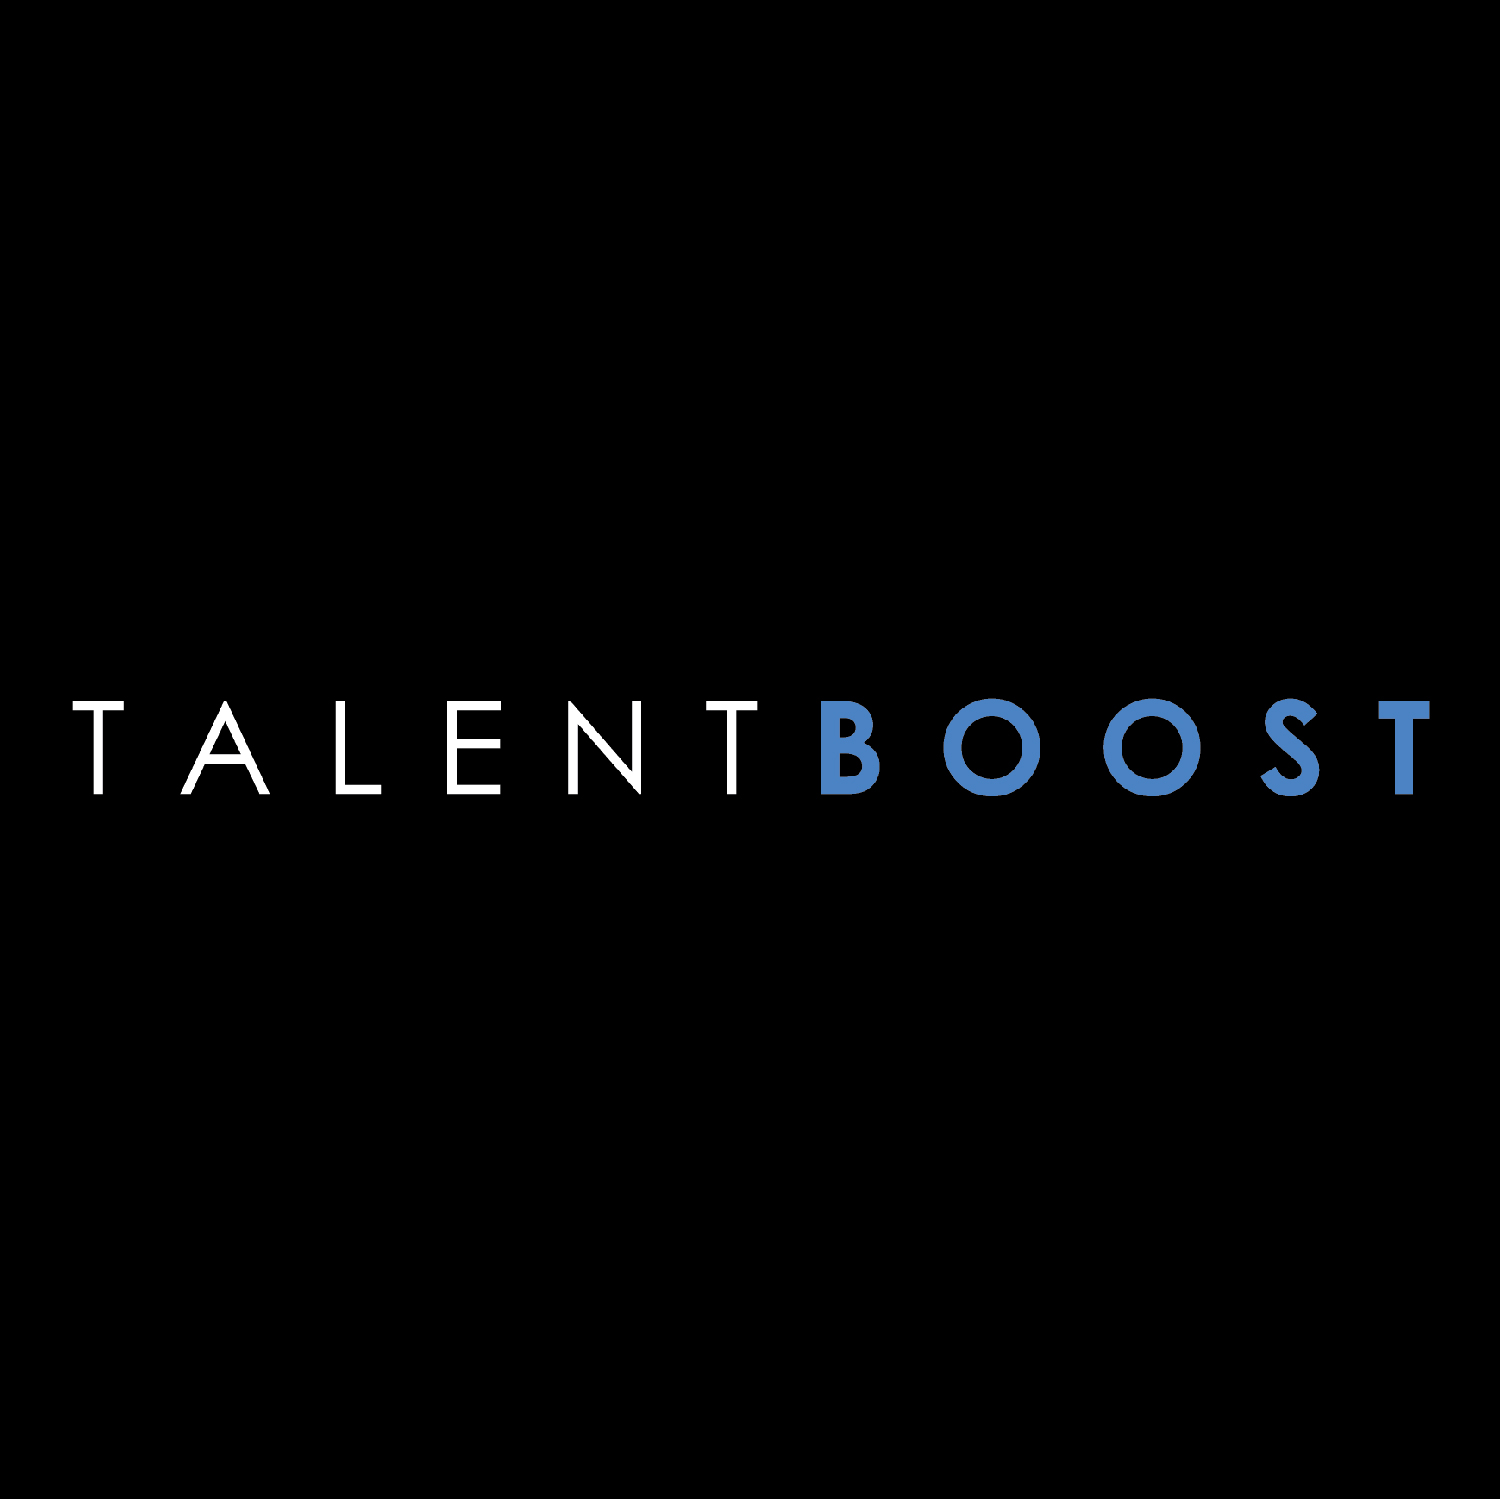 TalentBoost_LOGO_01.jpg